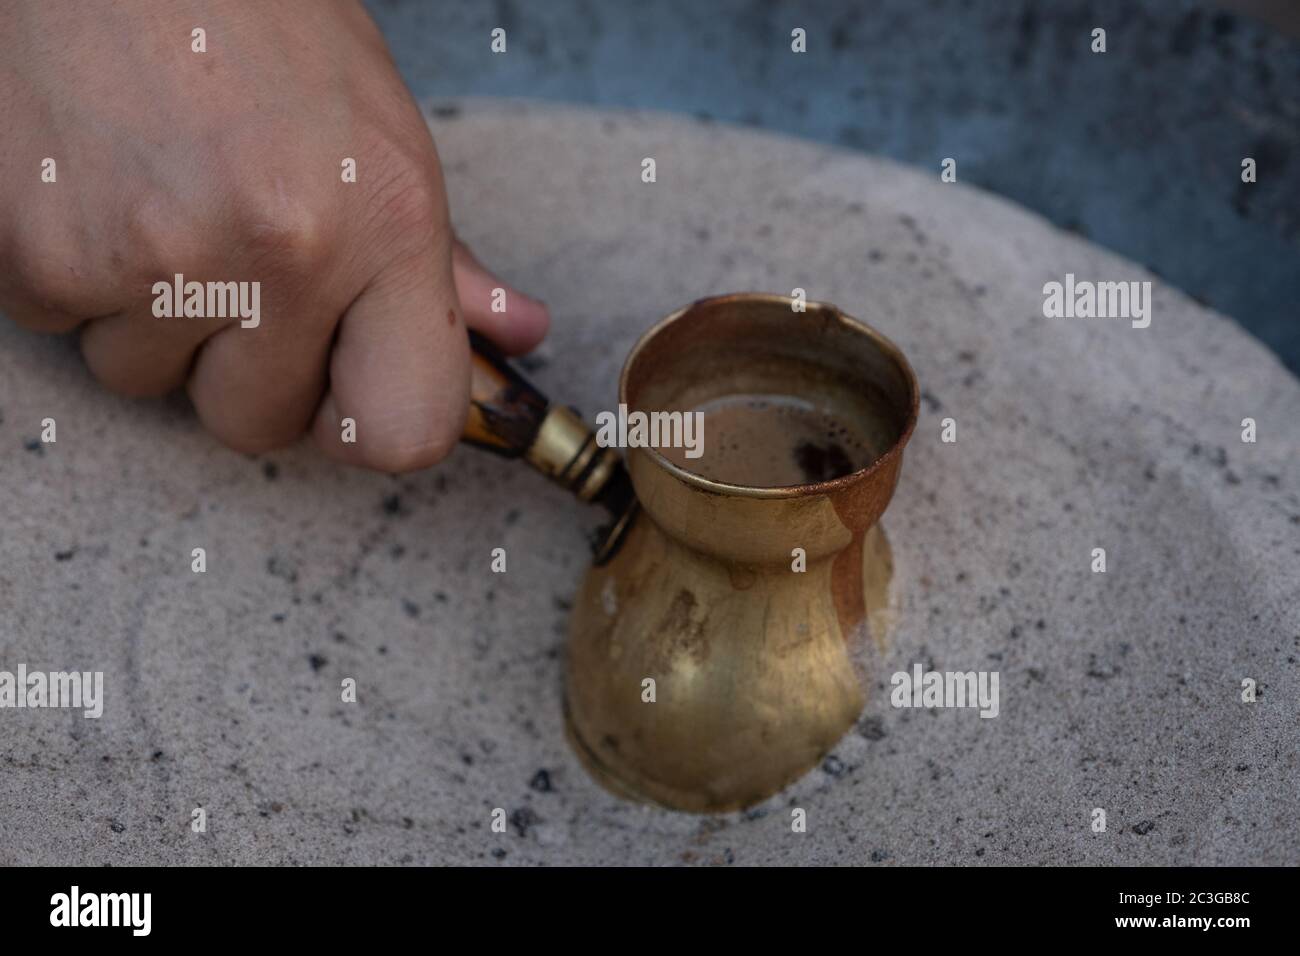 Preparation of desert arabic coffee on hot sand Stock Photo